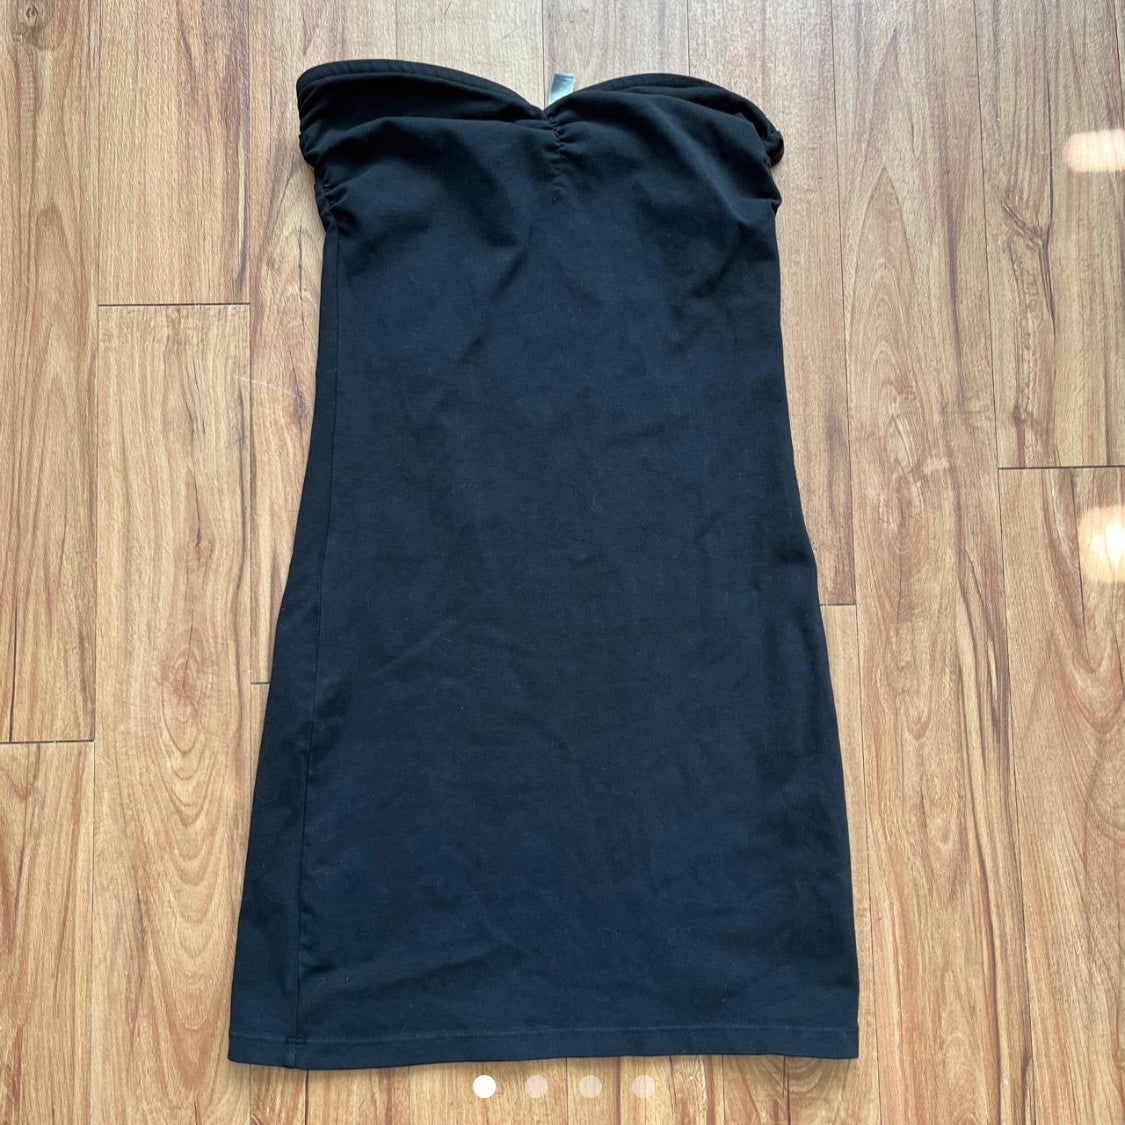 Black strapless dress